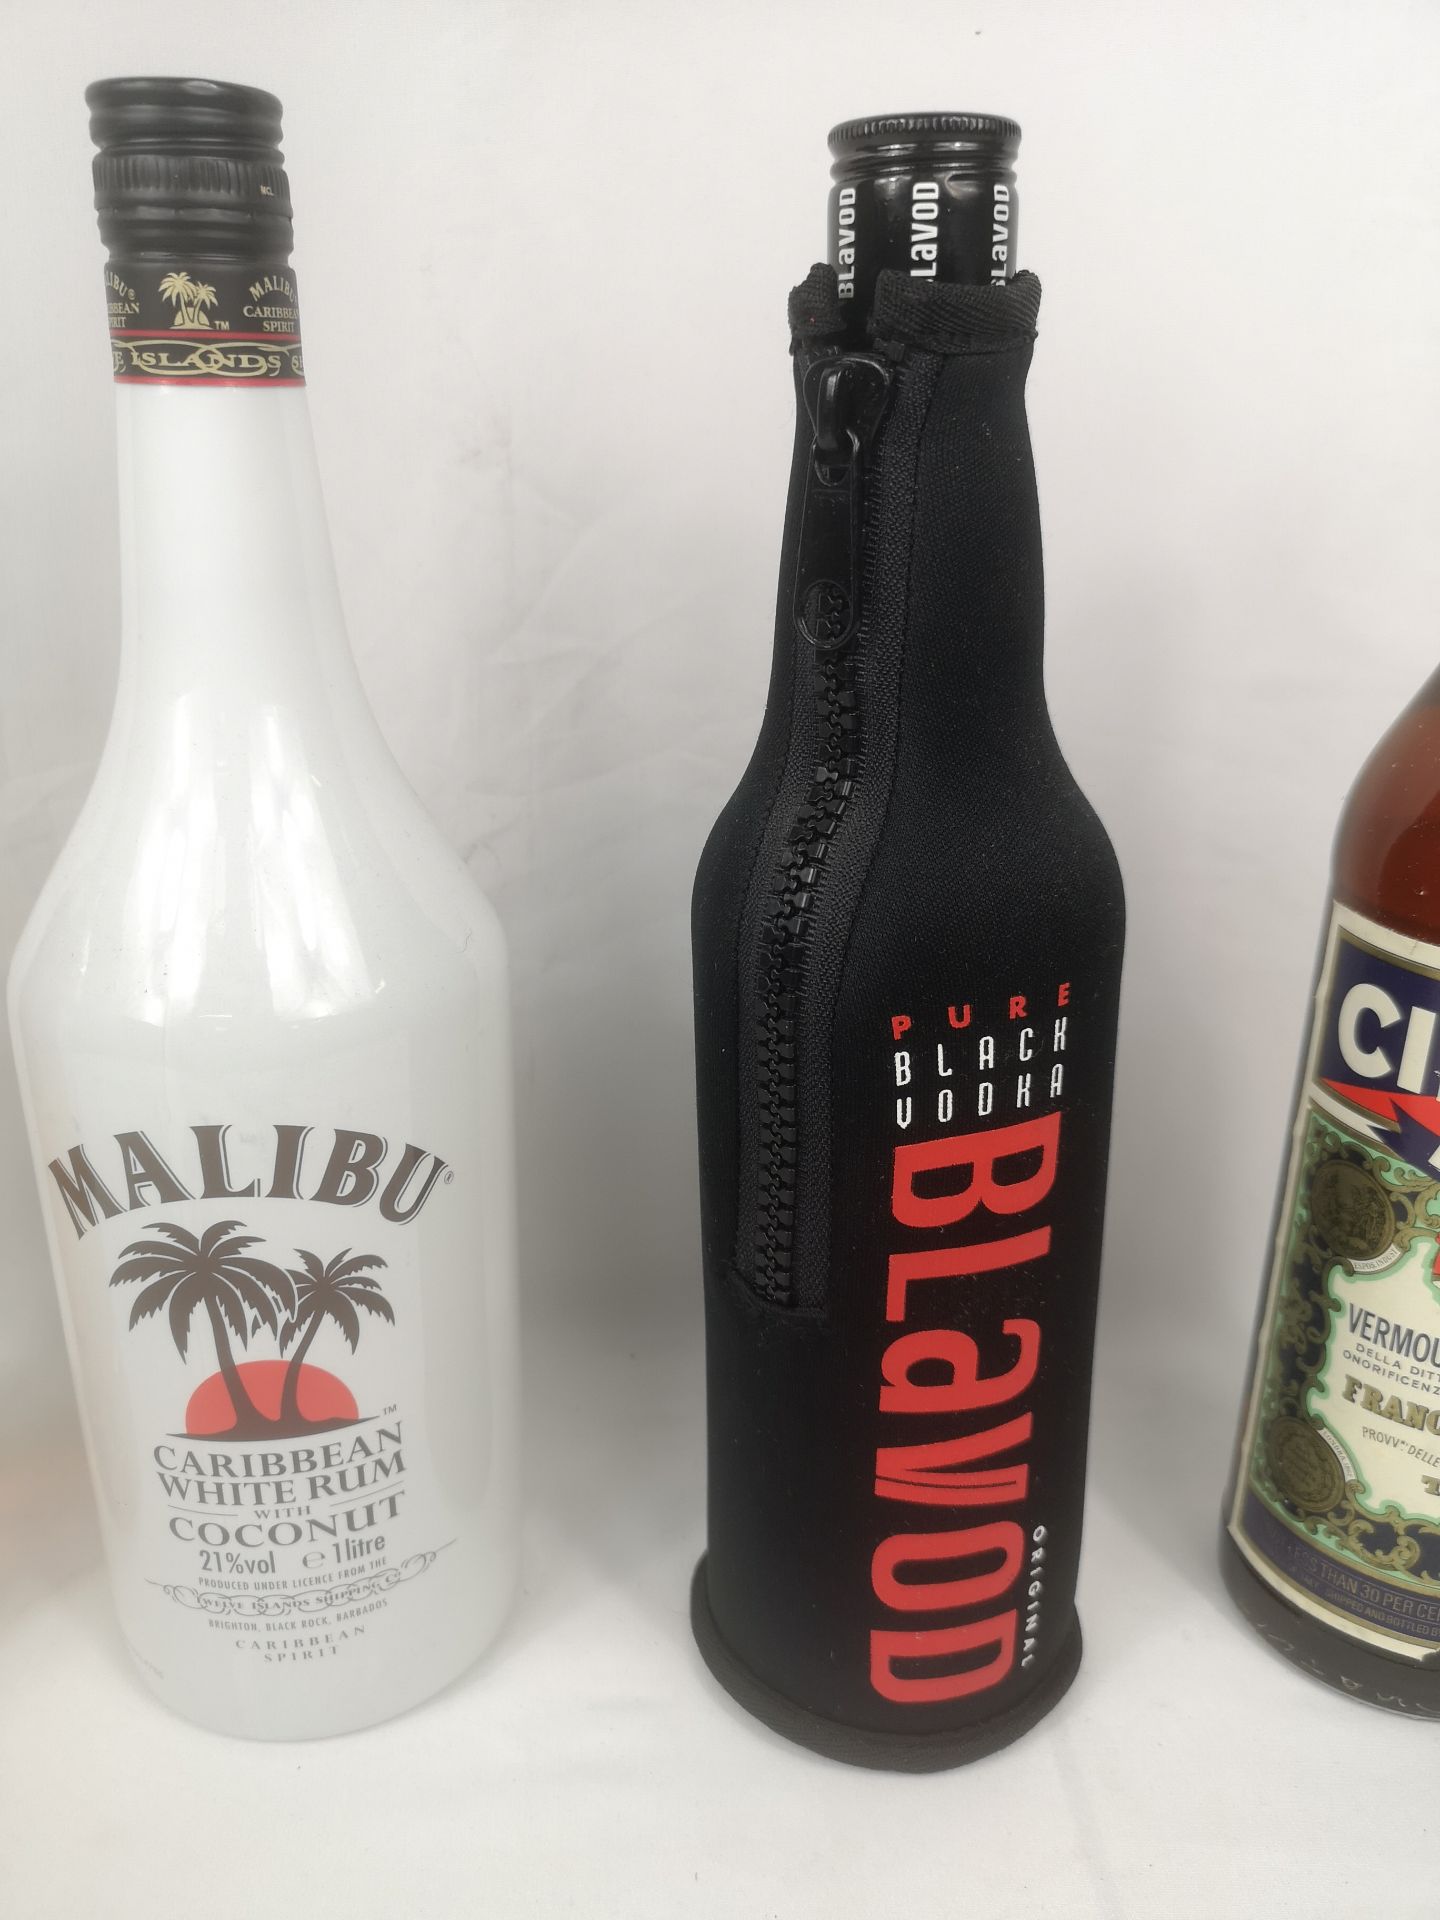 1l bottle of Malibu and other bottles - Image 3 of 8